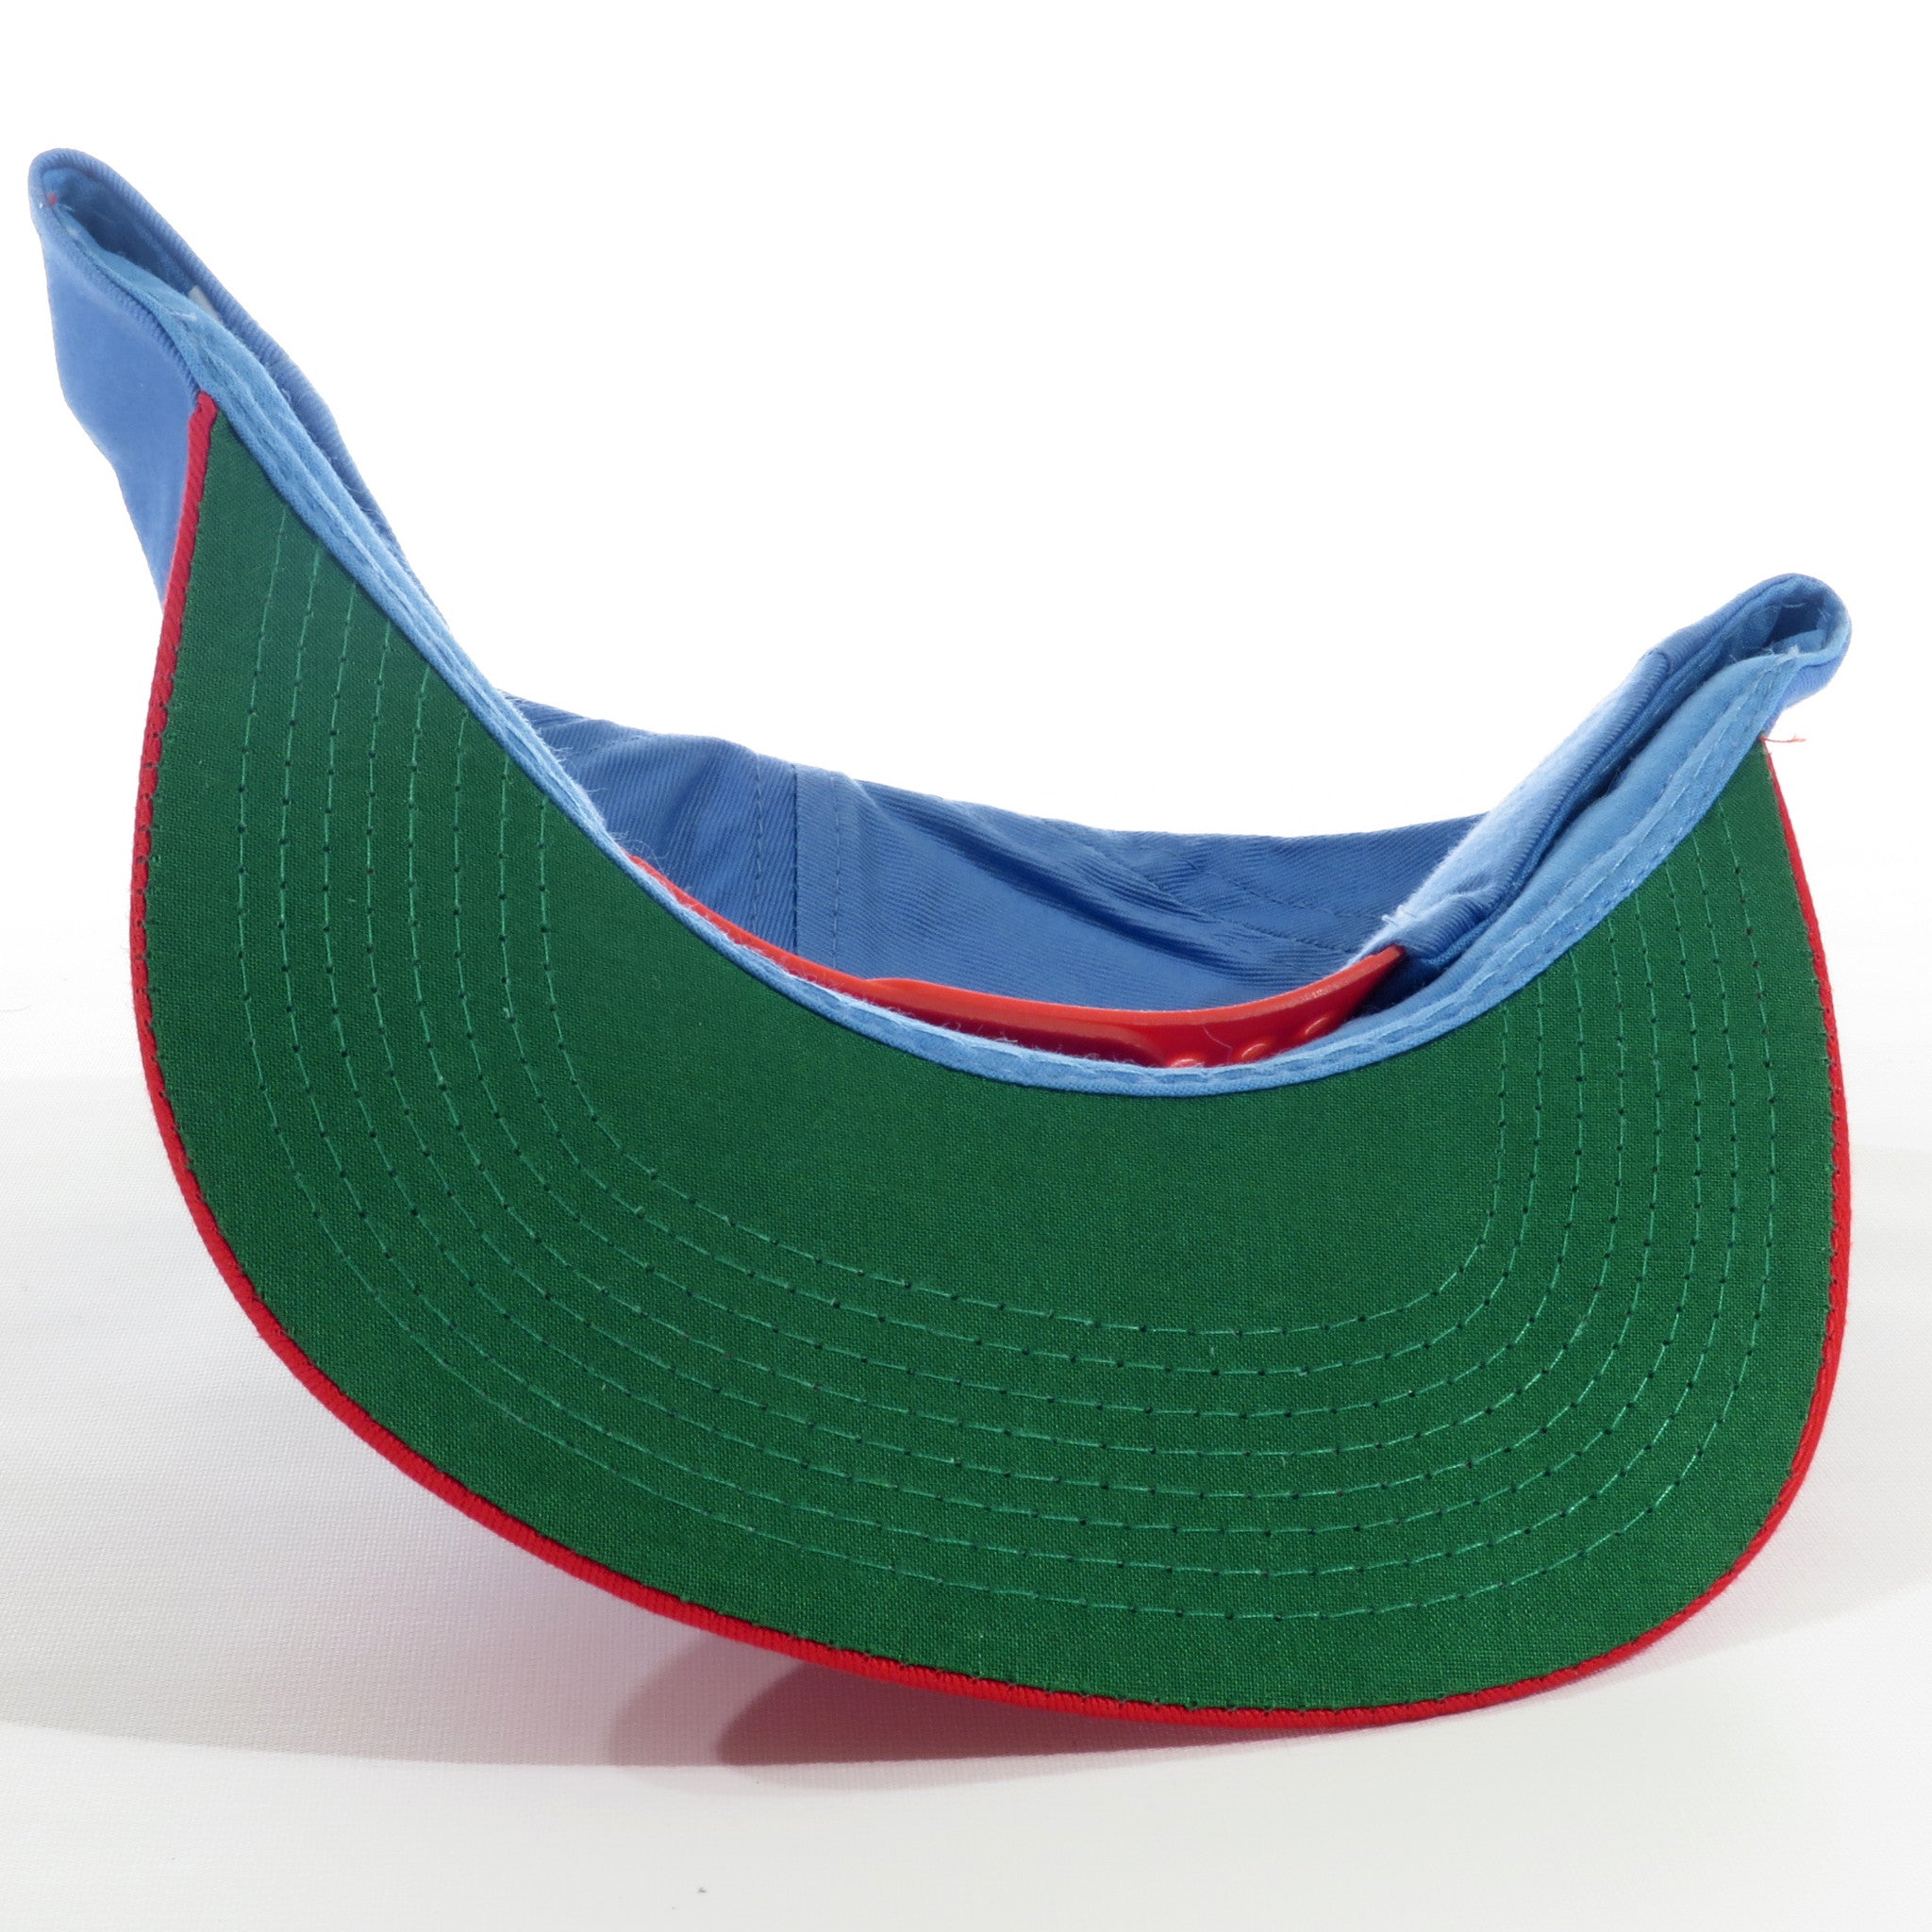 Houston Oilers Snapback Hat